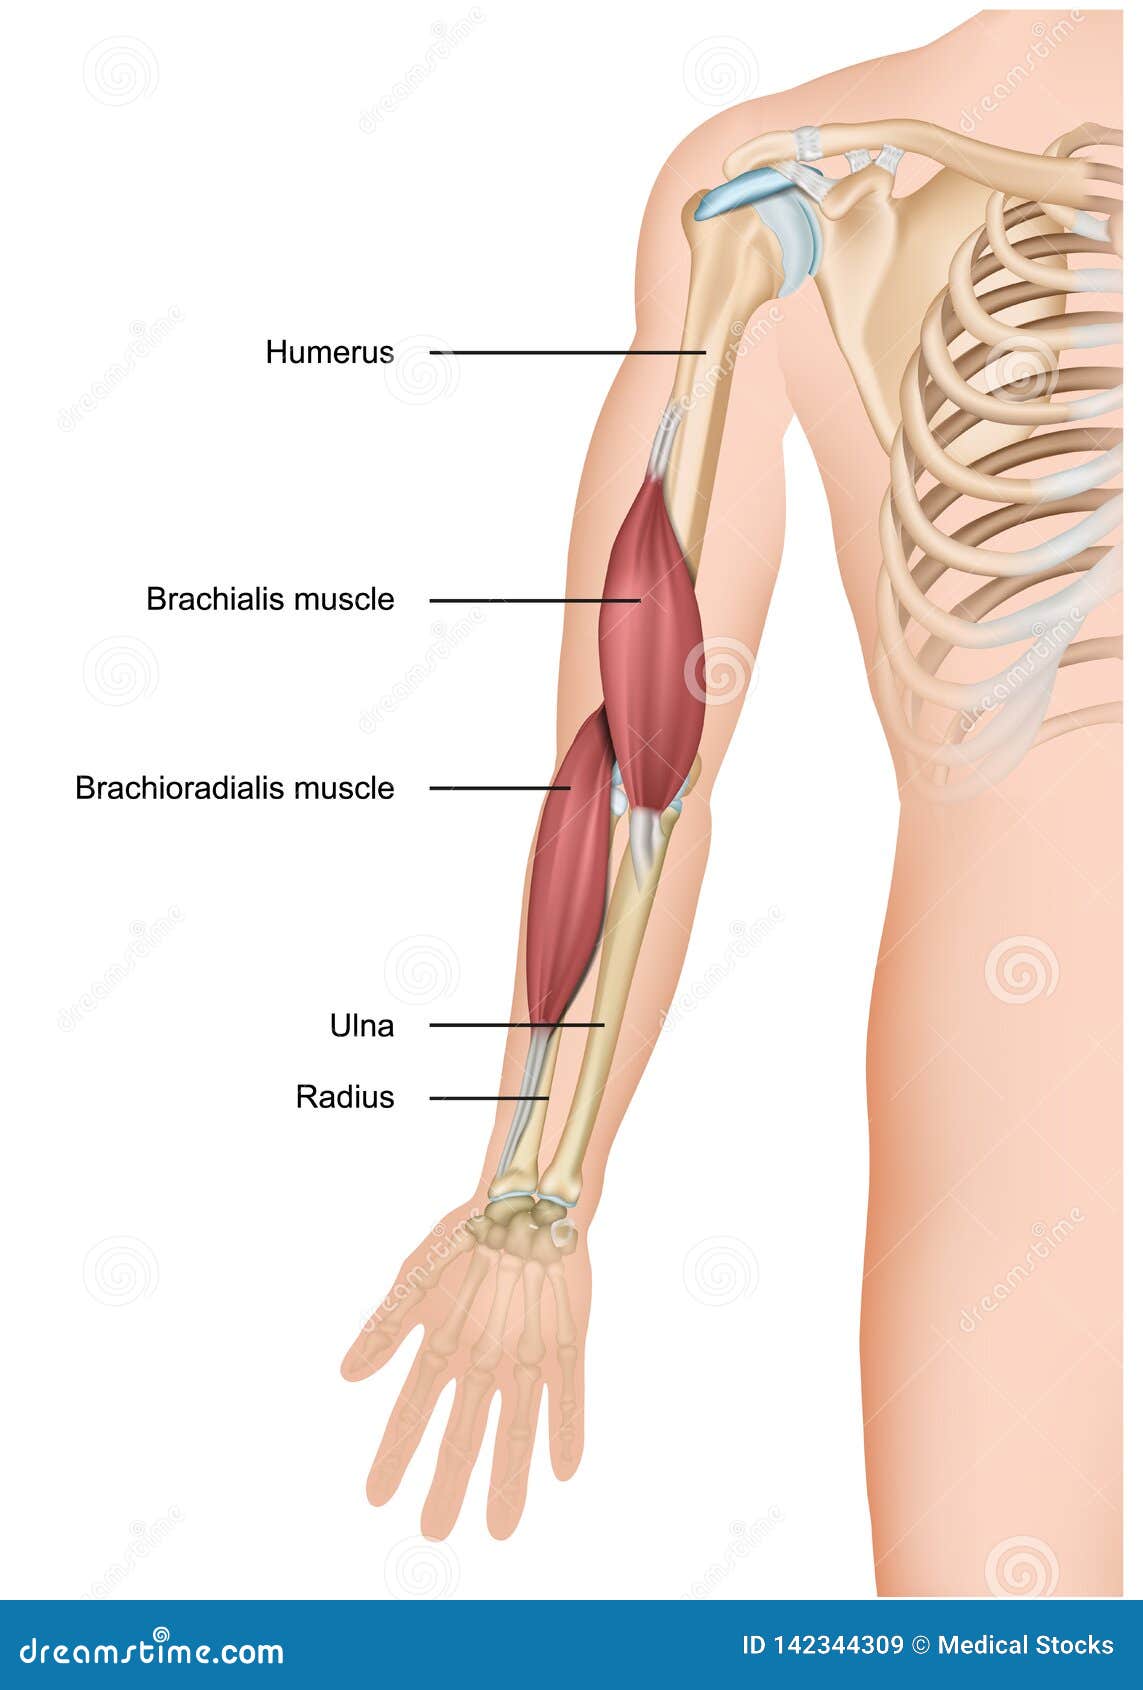 brachialis artrózis kezelést okoz)